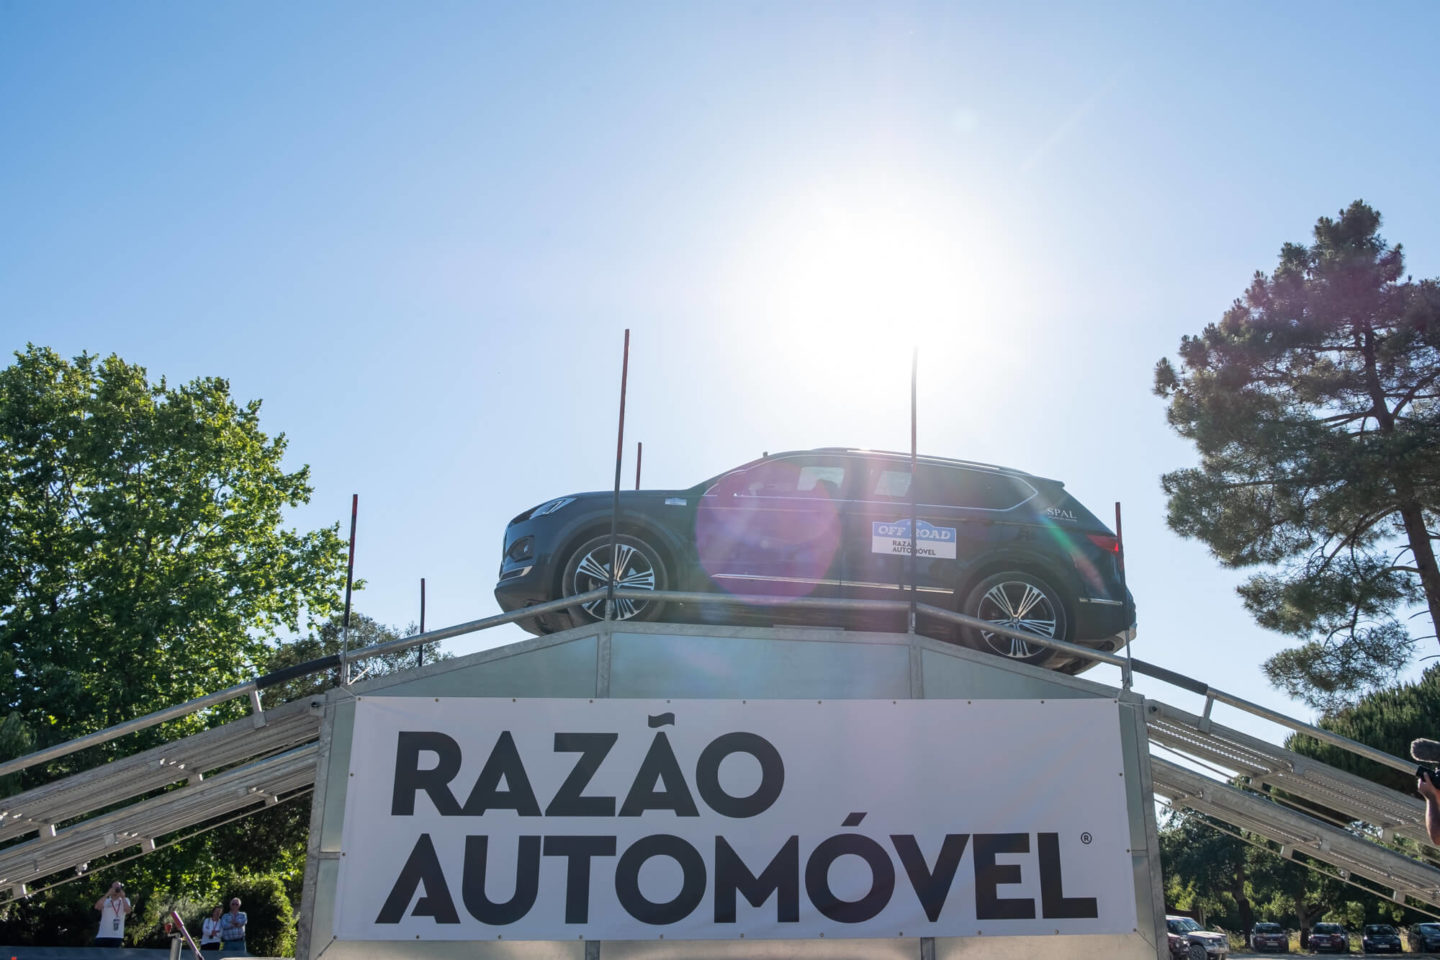 Off Road Razão Automóvel 2019